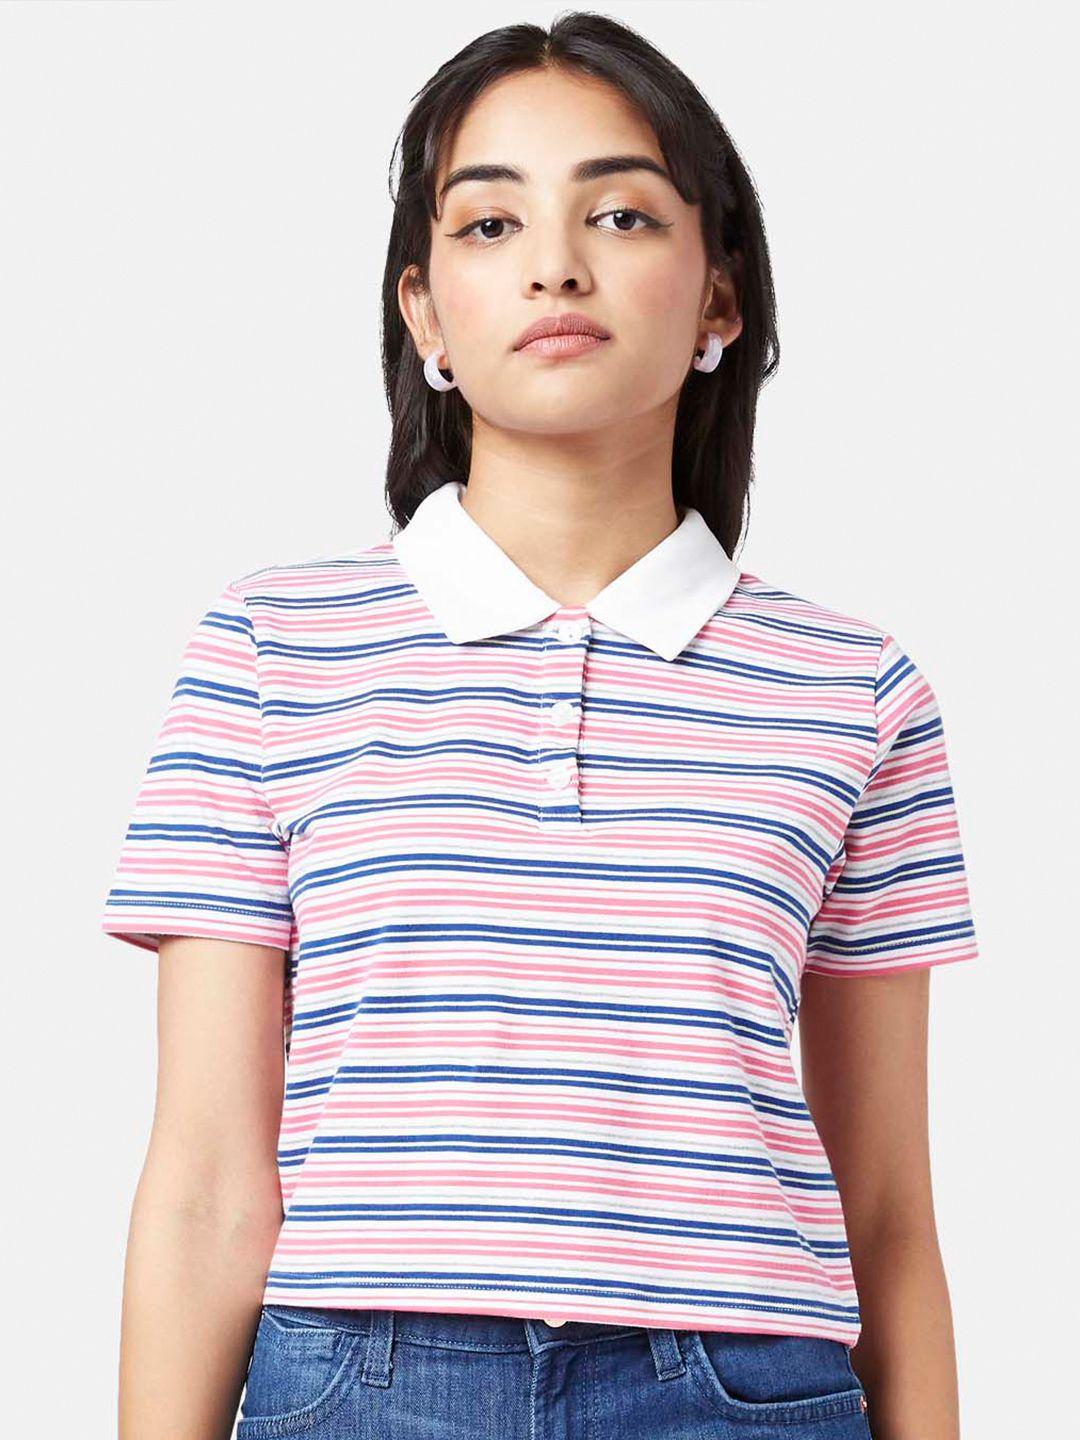 yu-by-pantaloons-horizontal-striped-shirt